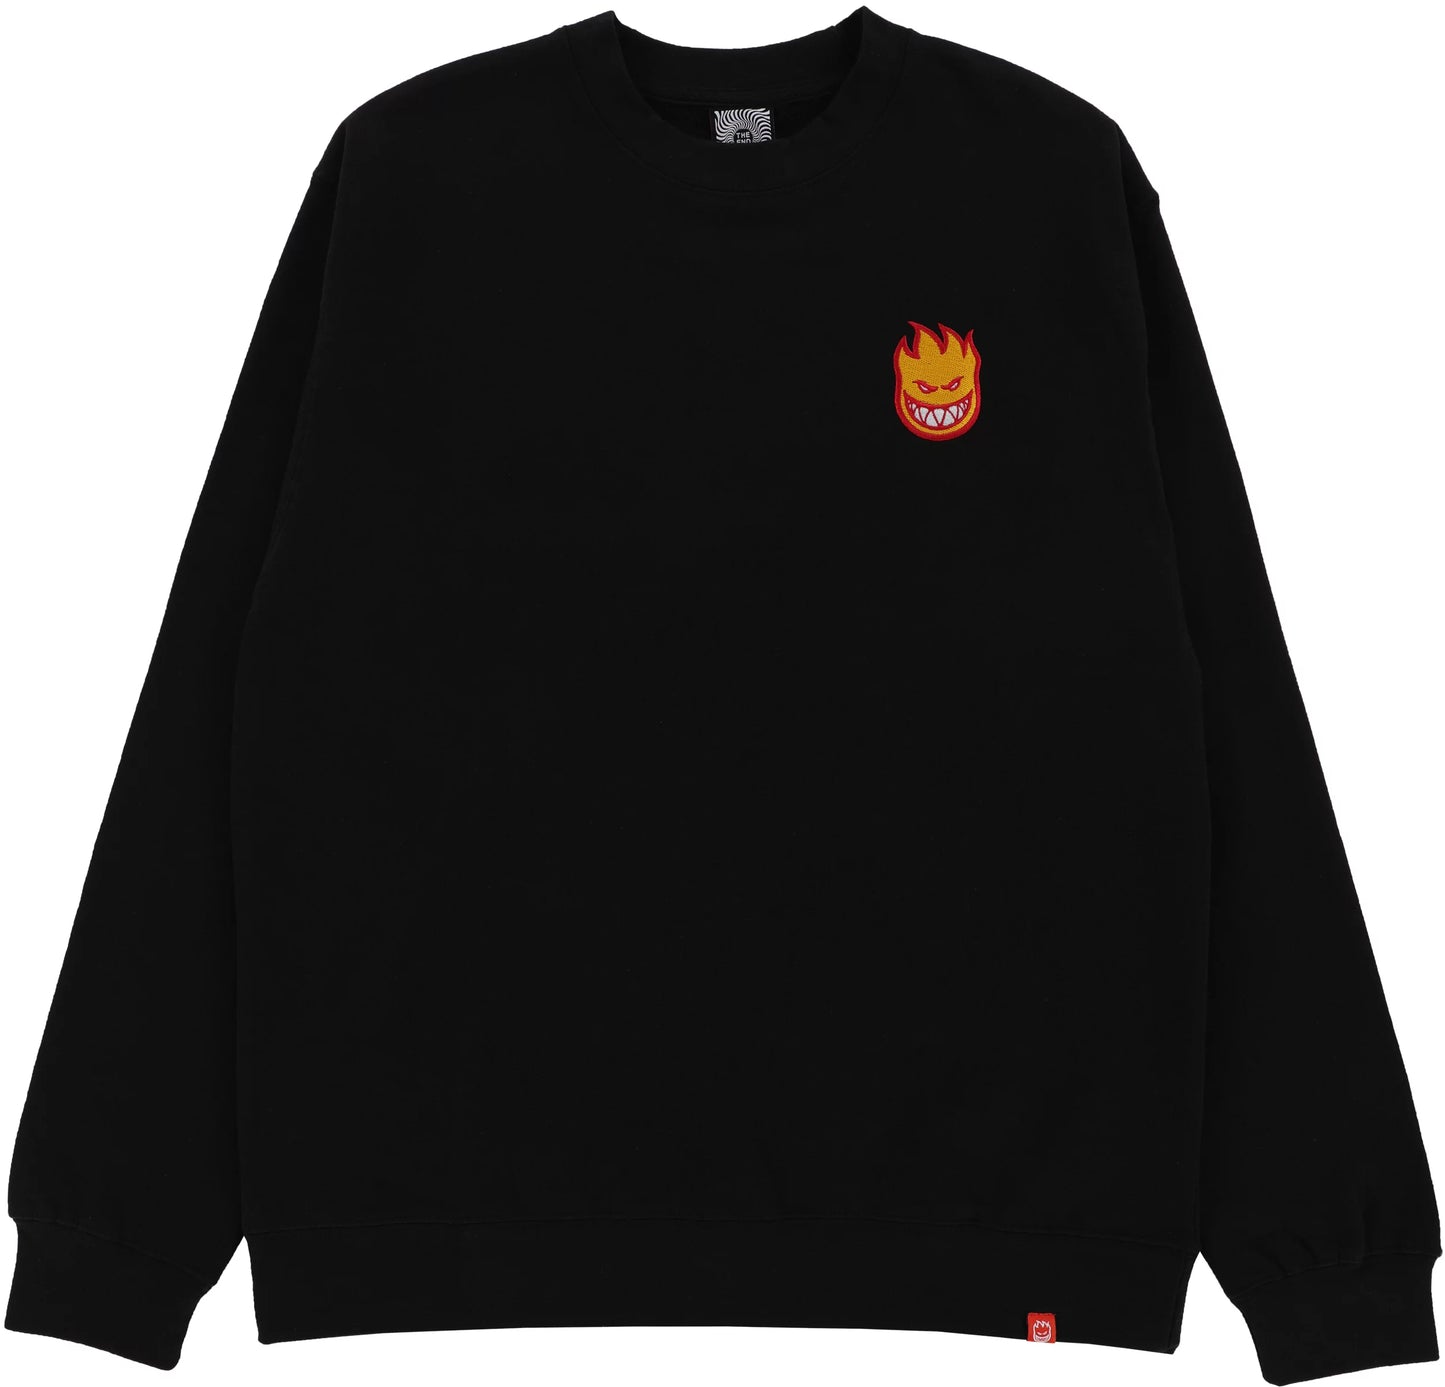 Spitfire Lil Bighead Crewneck Crew Sweatshirt - Black / Red / Gold / White